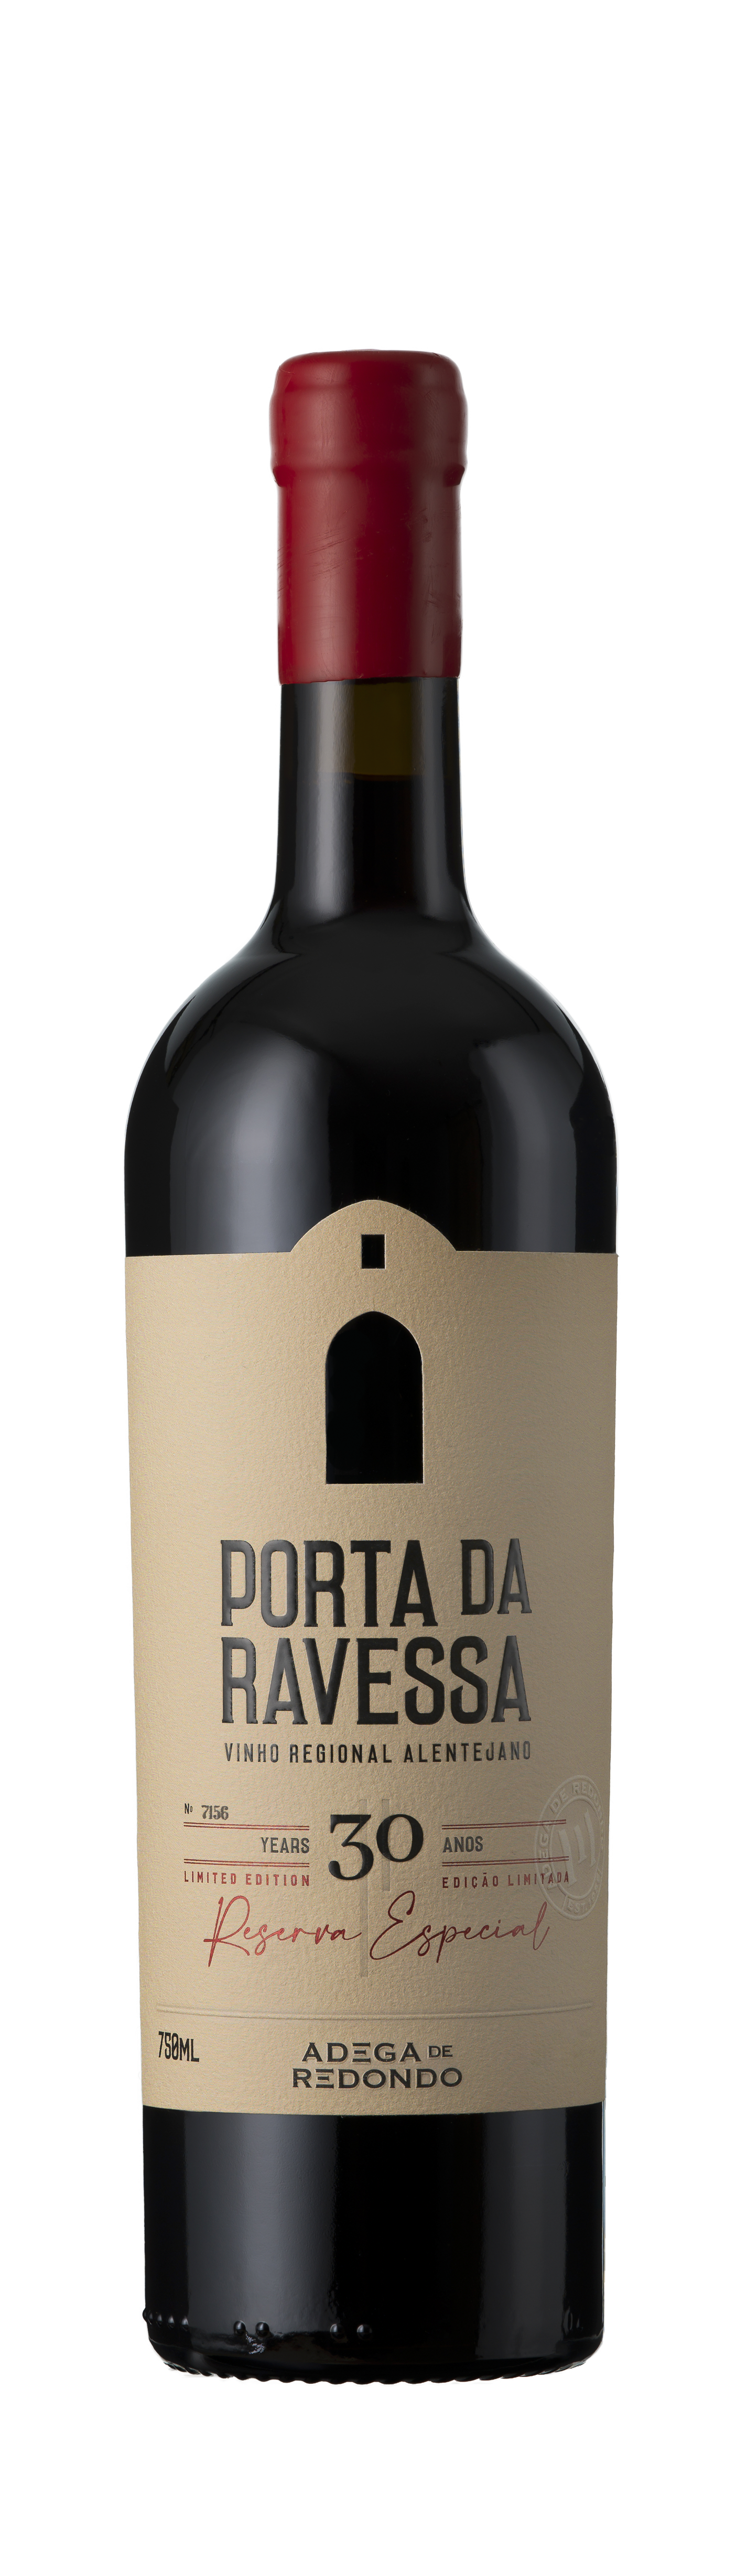 Alentejo, especial Adega Reserva (30yr), Wine da Alliance Tinto Porta IGP Portugal, Redondo, de 2017 - Ravessa